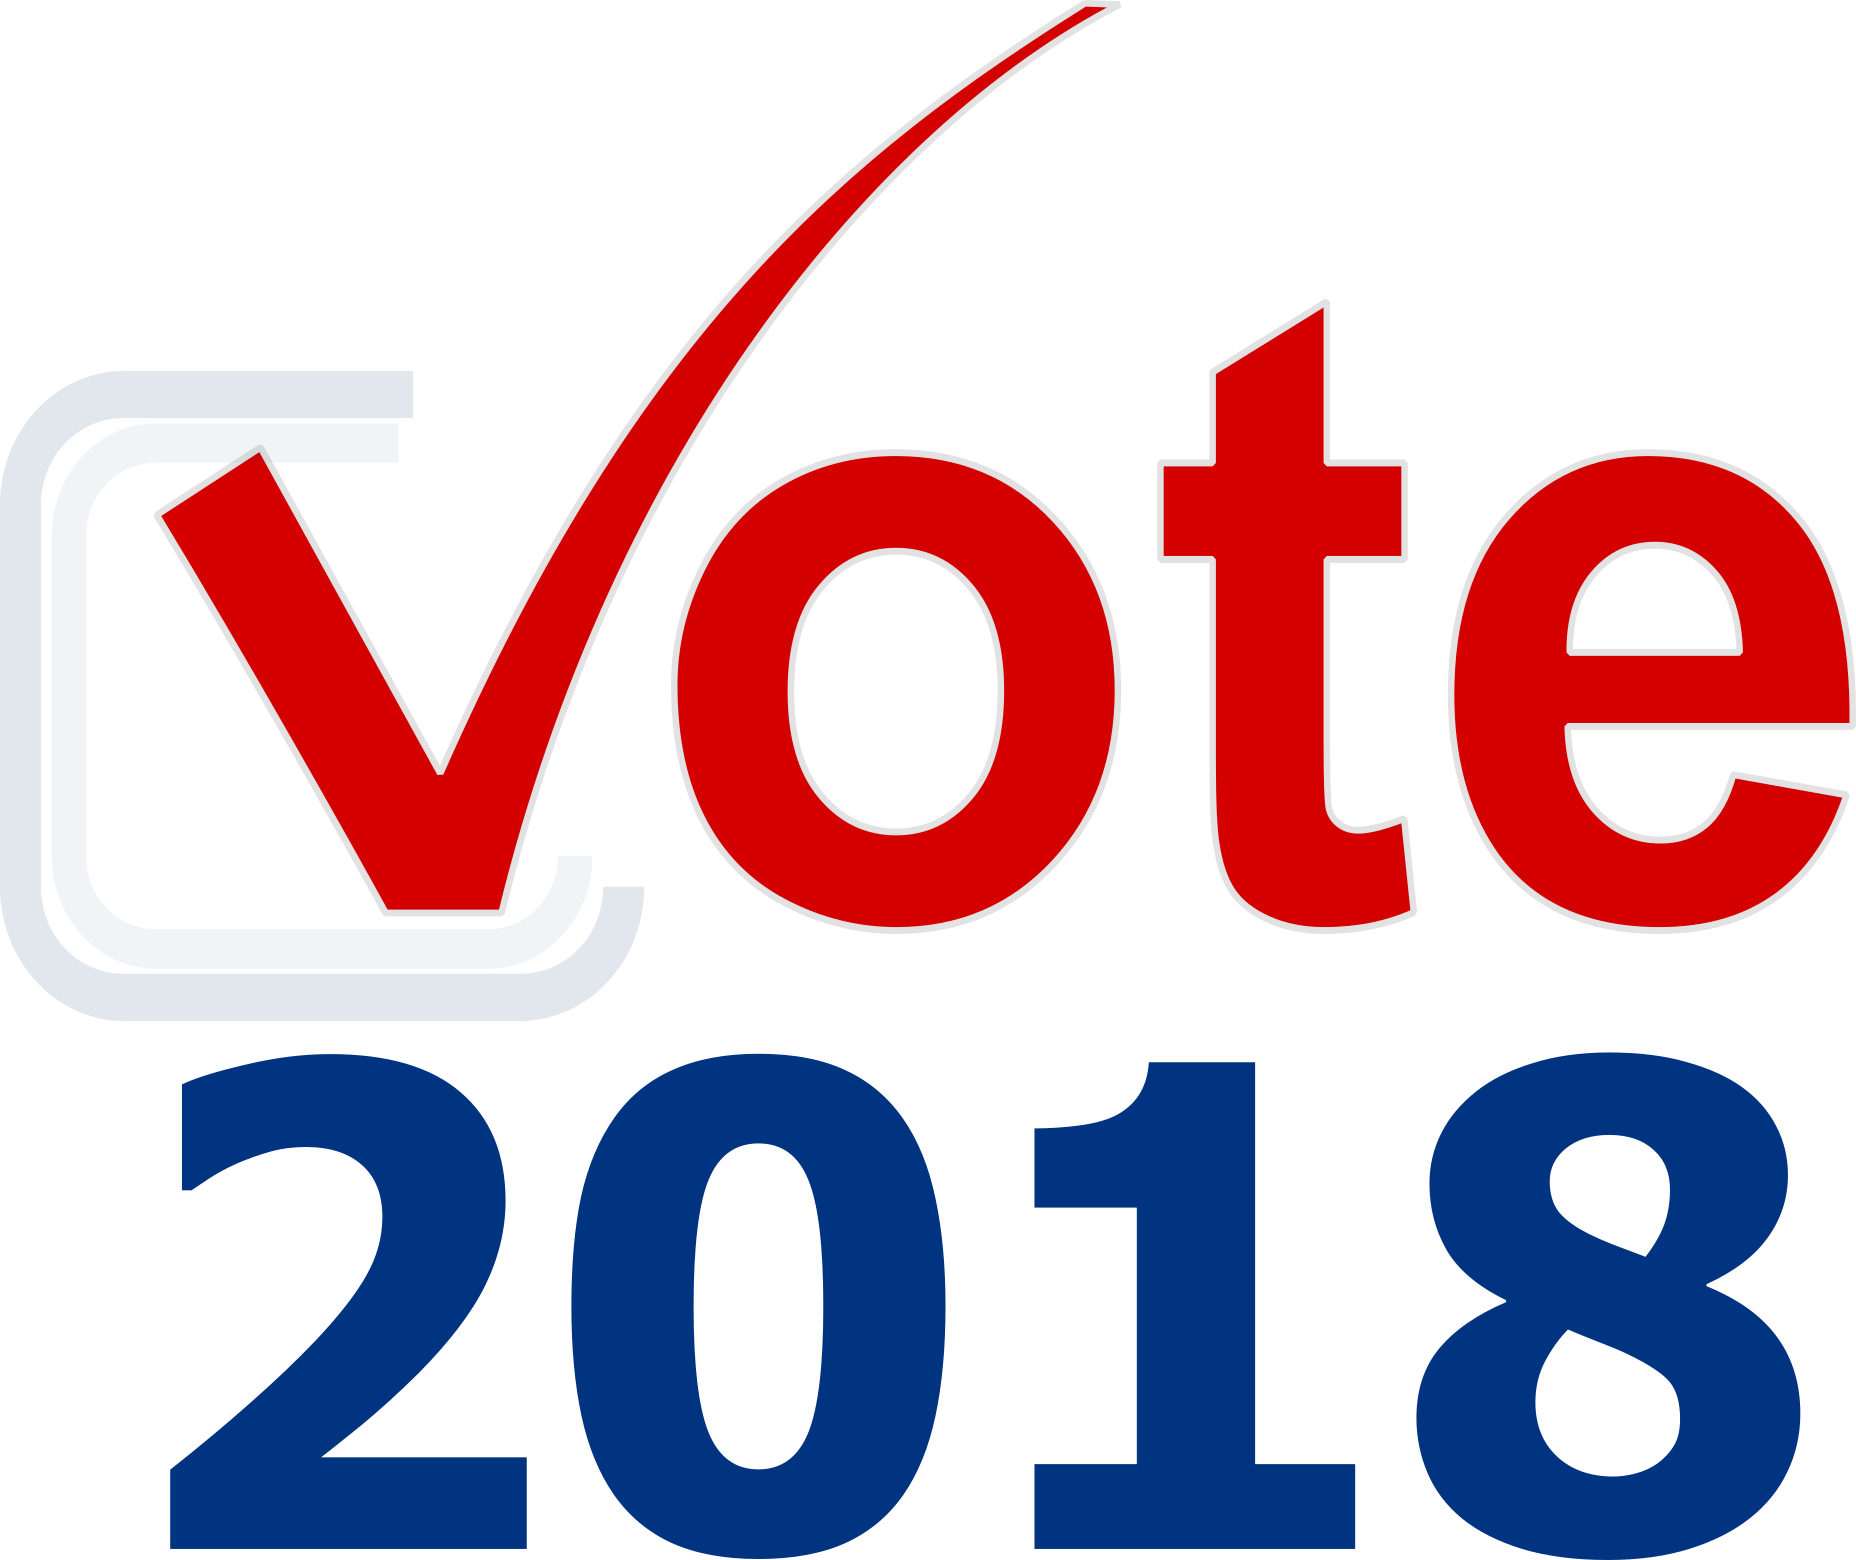 Vote 2018